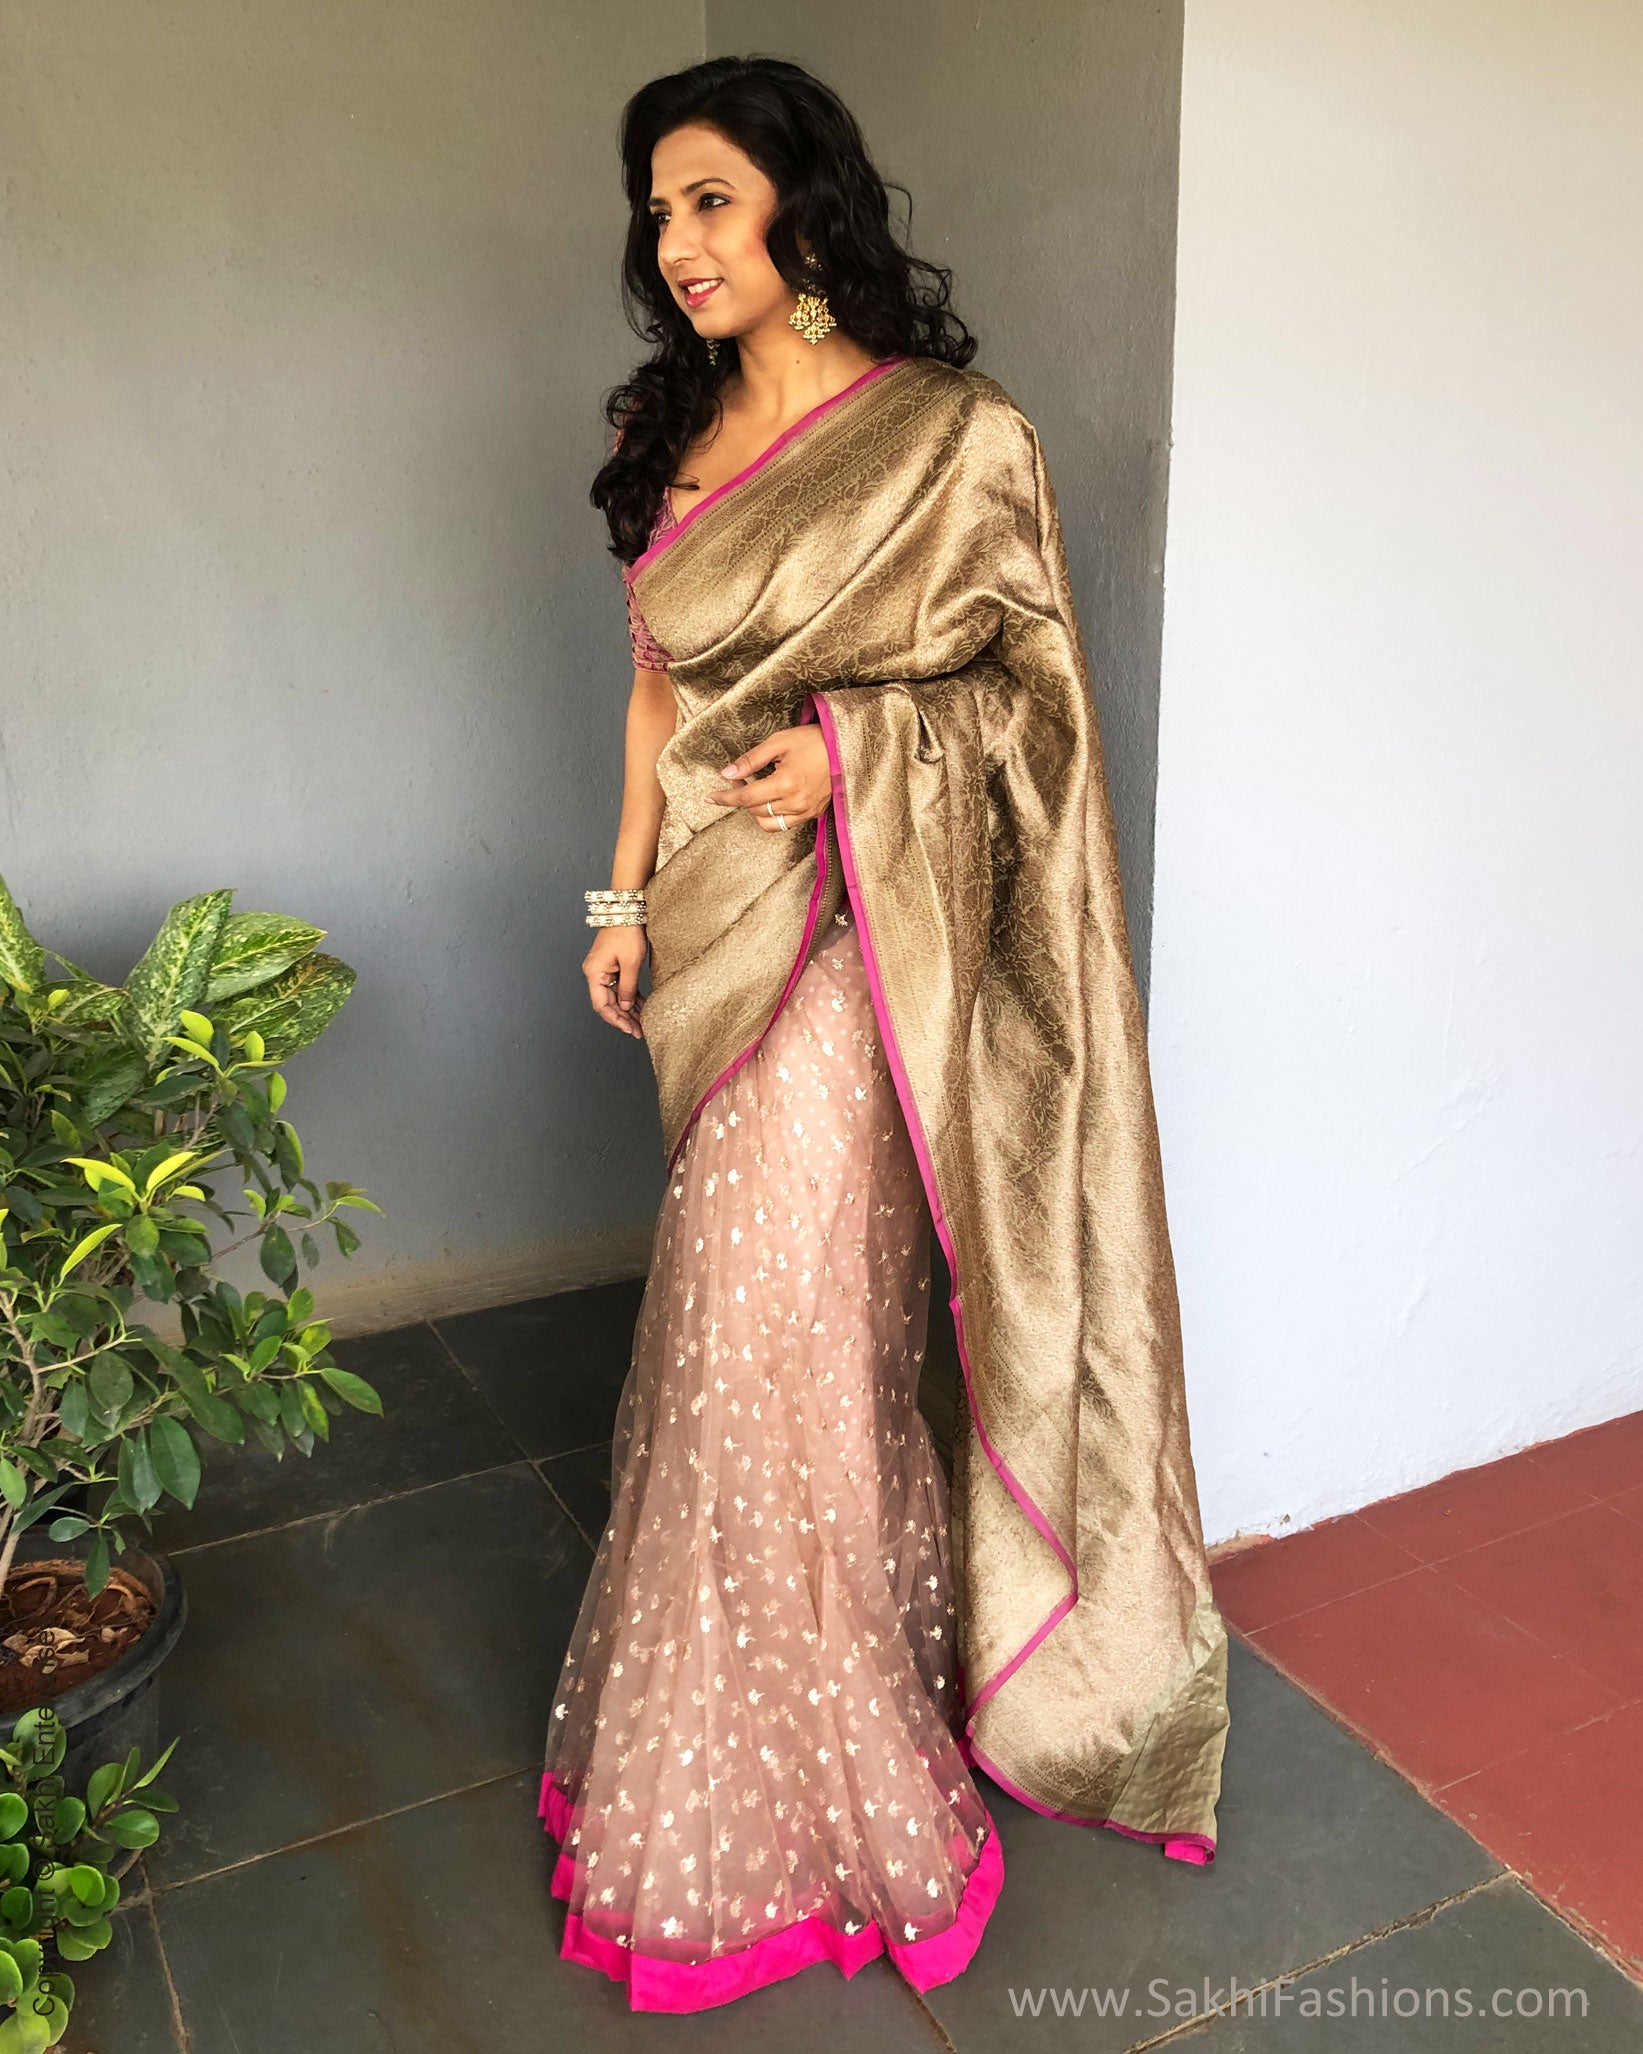 Crossover Ready saree | Sakhi Fashions – sakhifashions